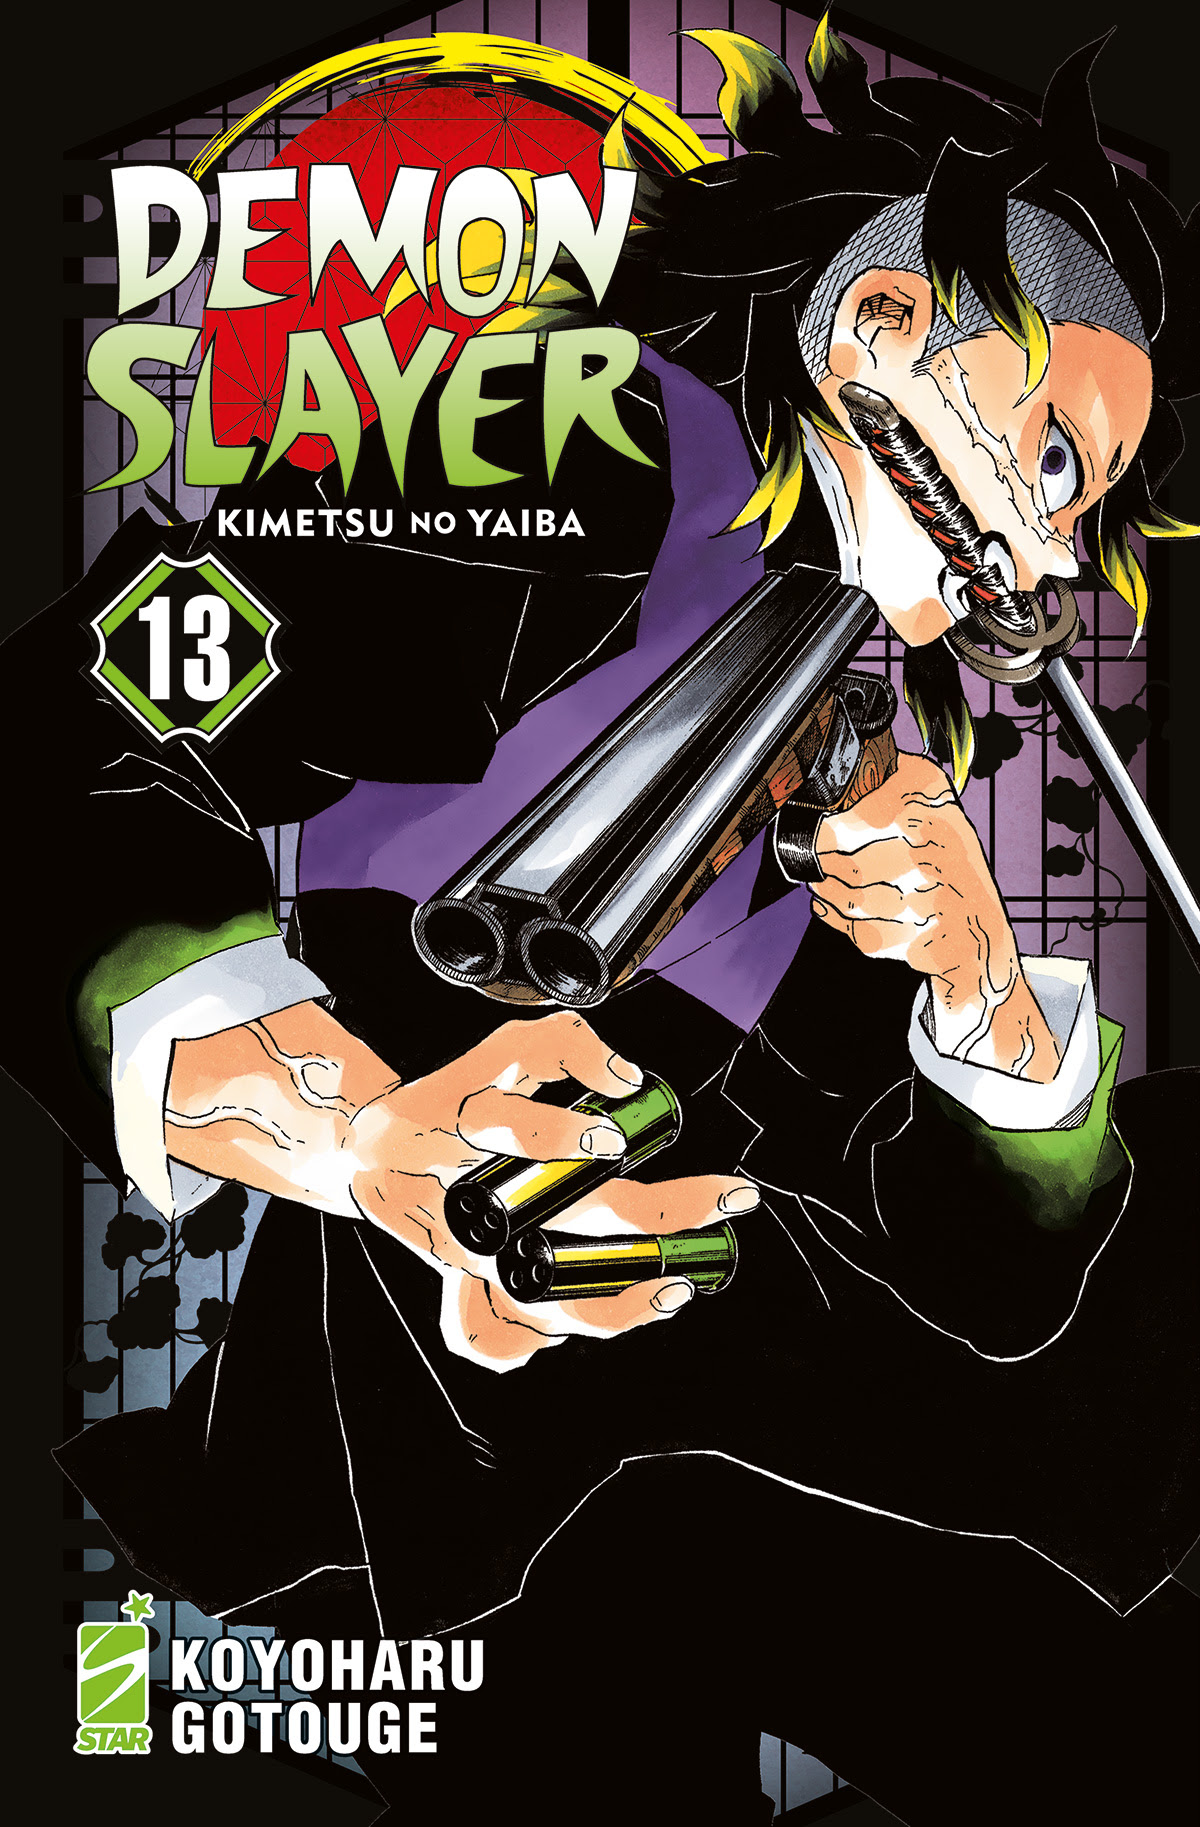 Demon Slayer: Kimetsu no Yaiba, Vol. 13 in Kindle/PDF/EPUB